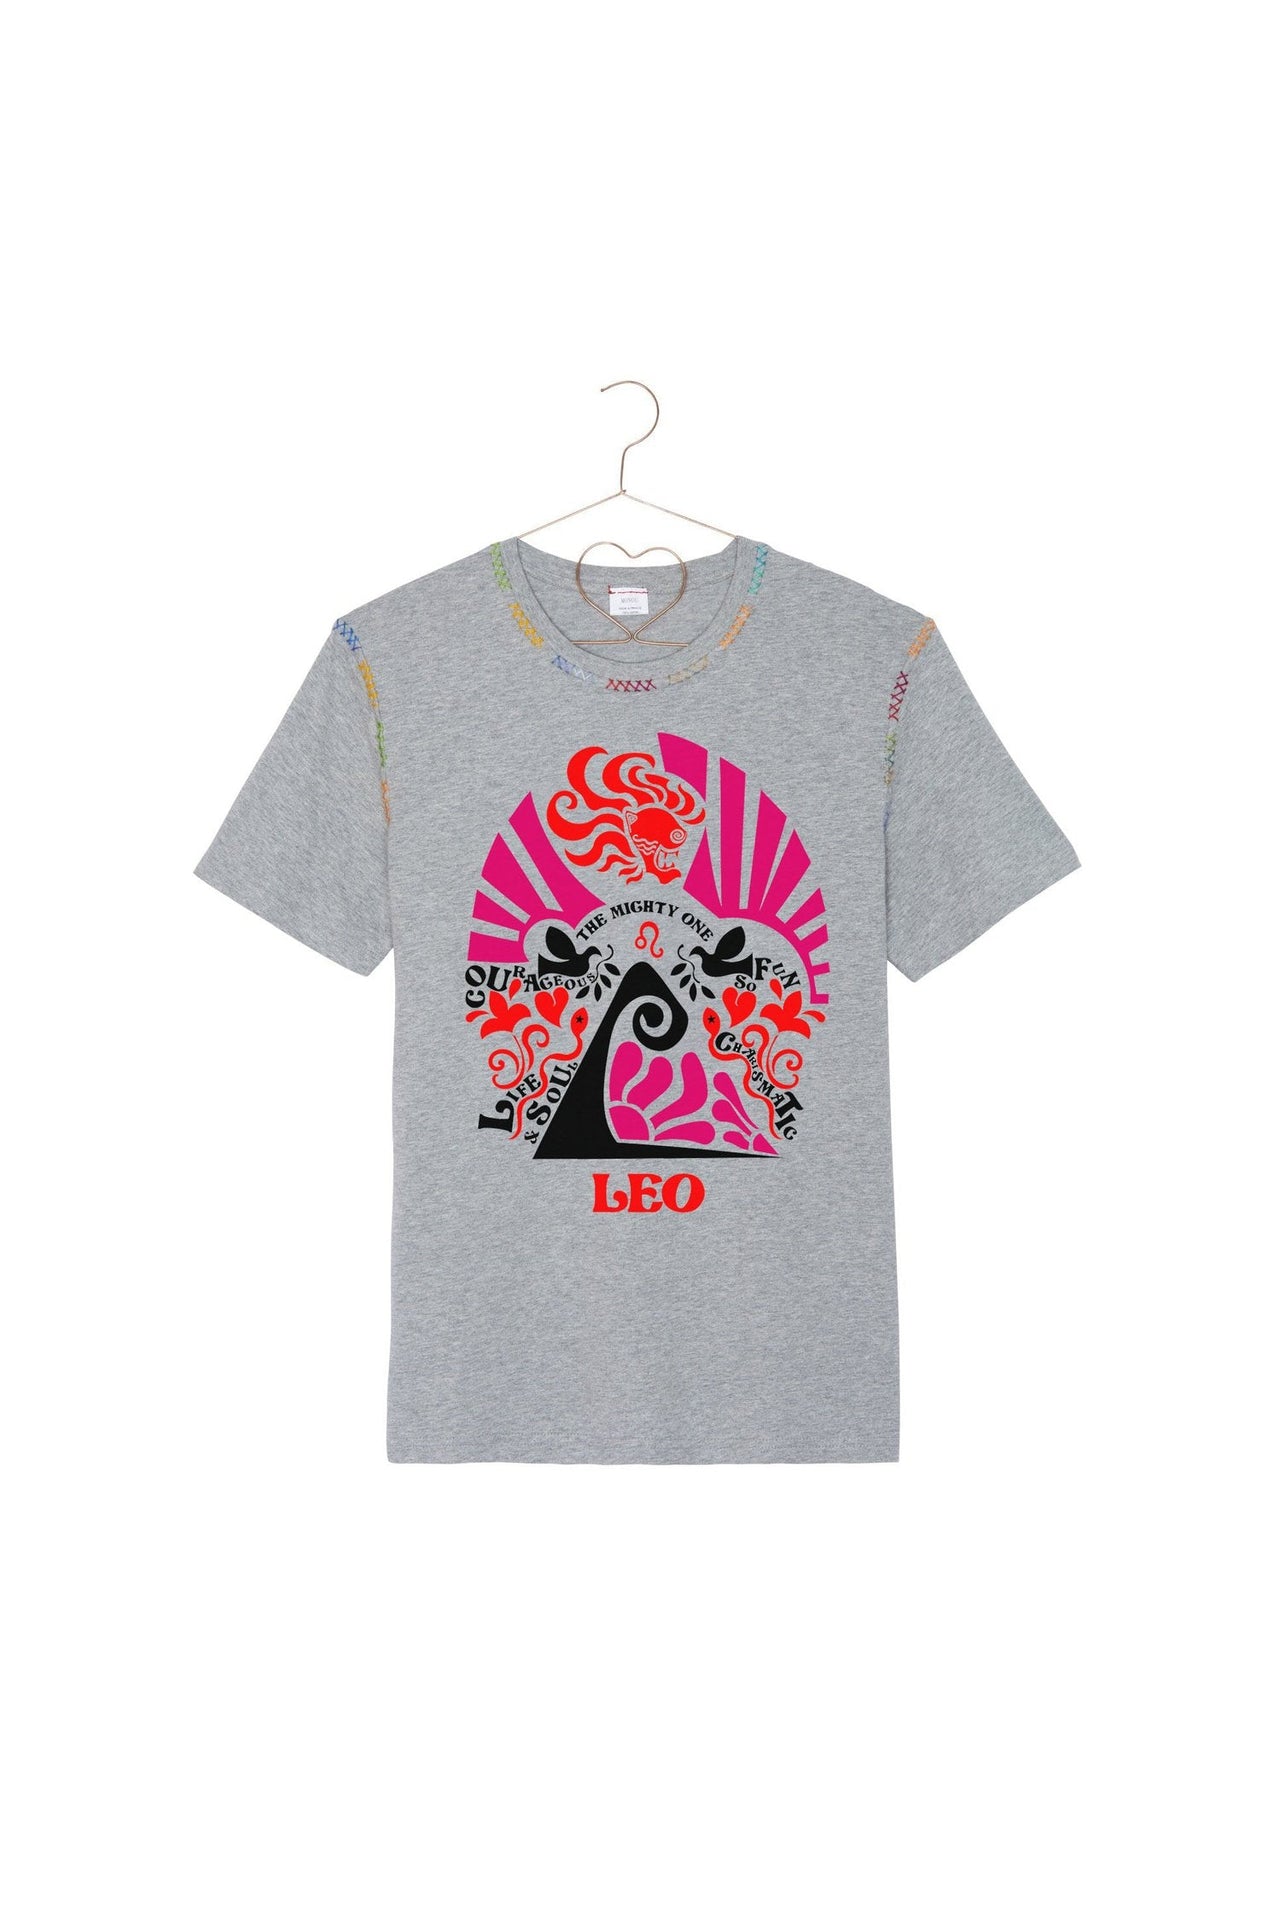 ASTRO TEE LEO GREY-T-Shirt-Monoki-Debs Boutique